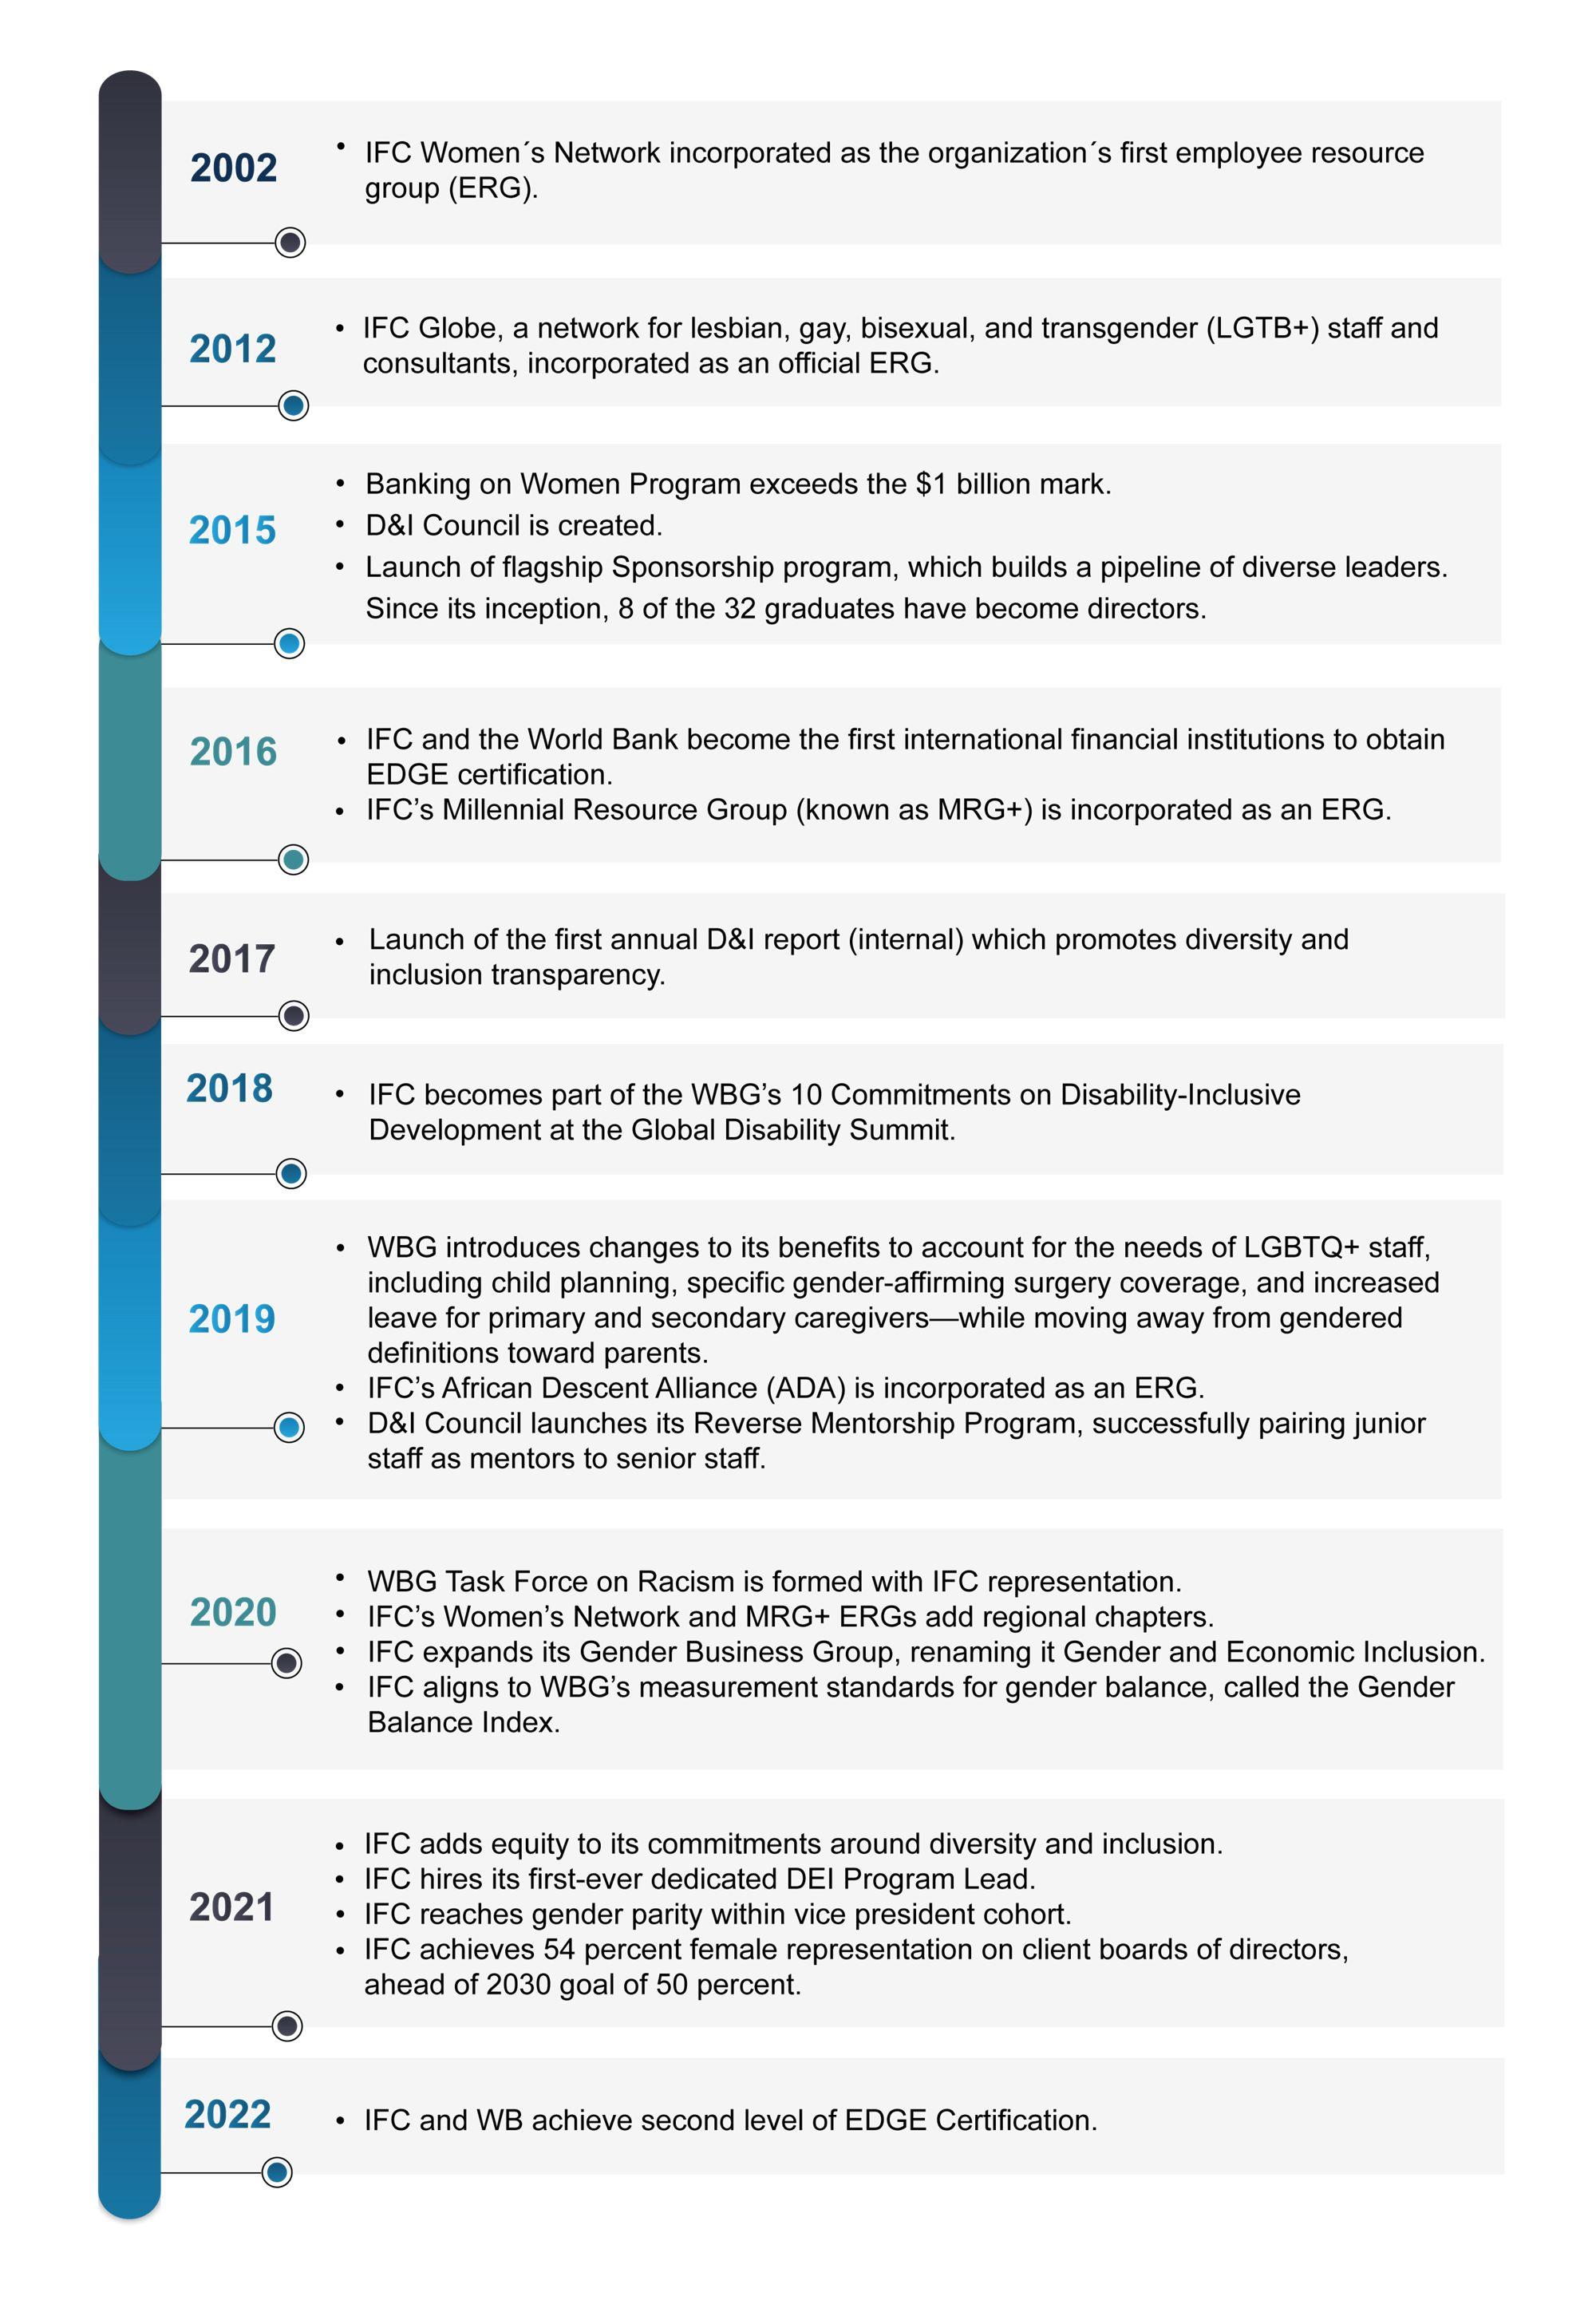 Infographic: IFC DEI Timeline